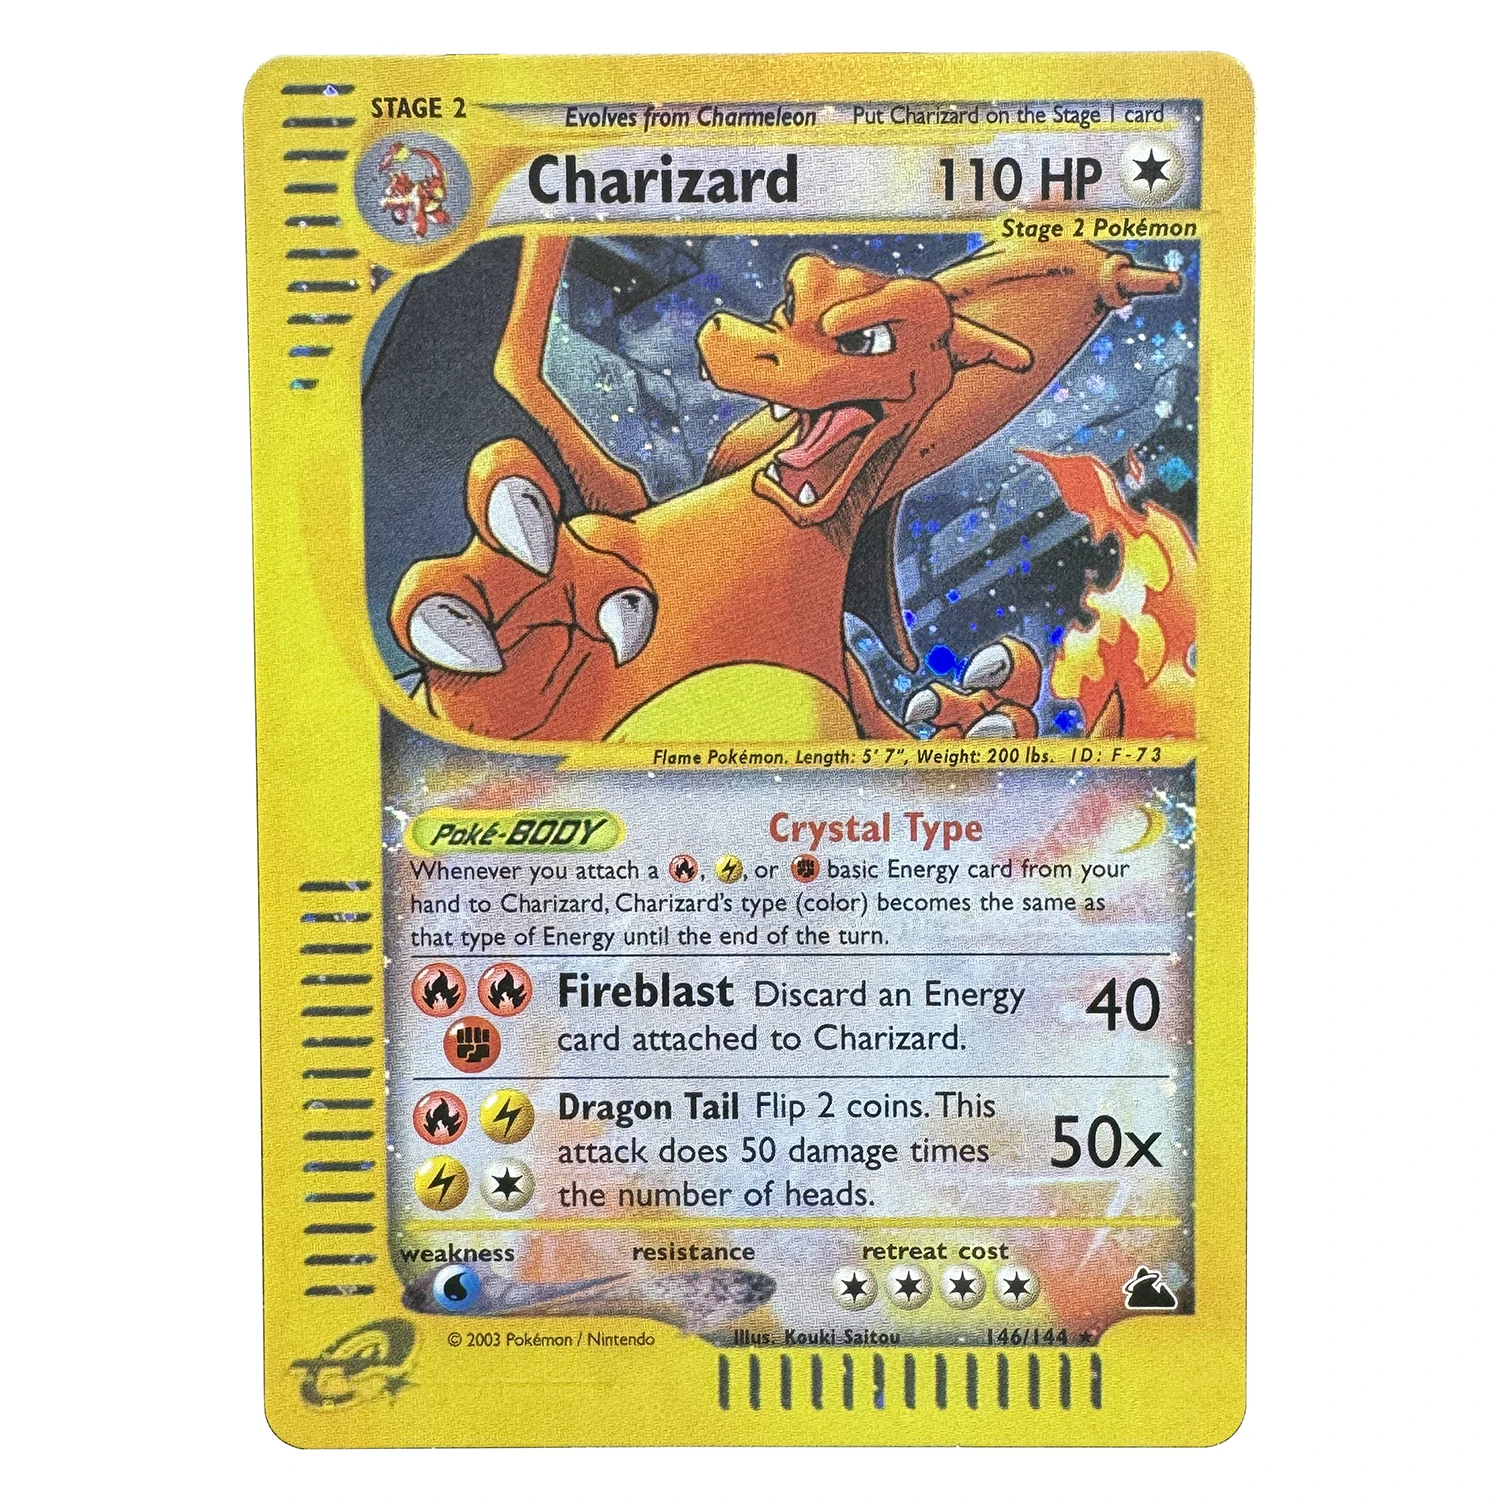 PTCG-Cartes Pokémon F Single 1st Edition E-Card, Charizard, Skyridge SK,  Foil Cards, Alakazam Classic Game Collection Proxy - AliExpress